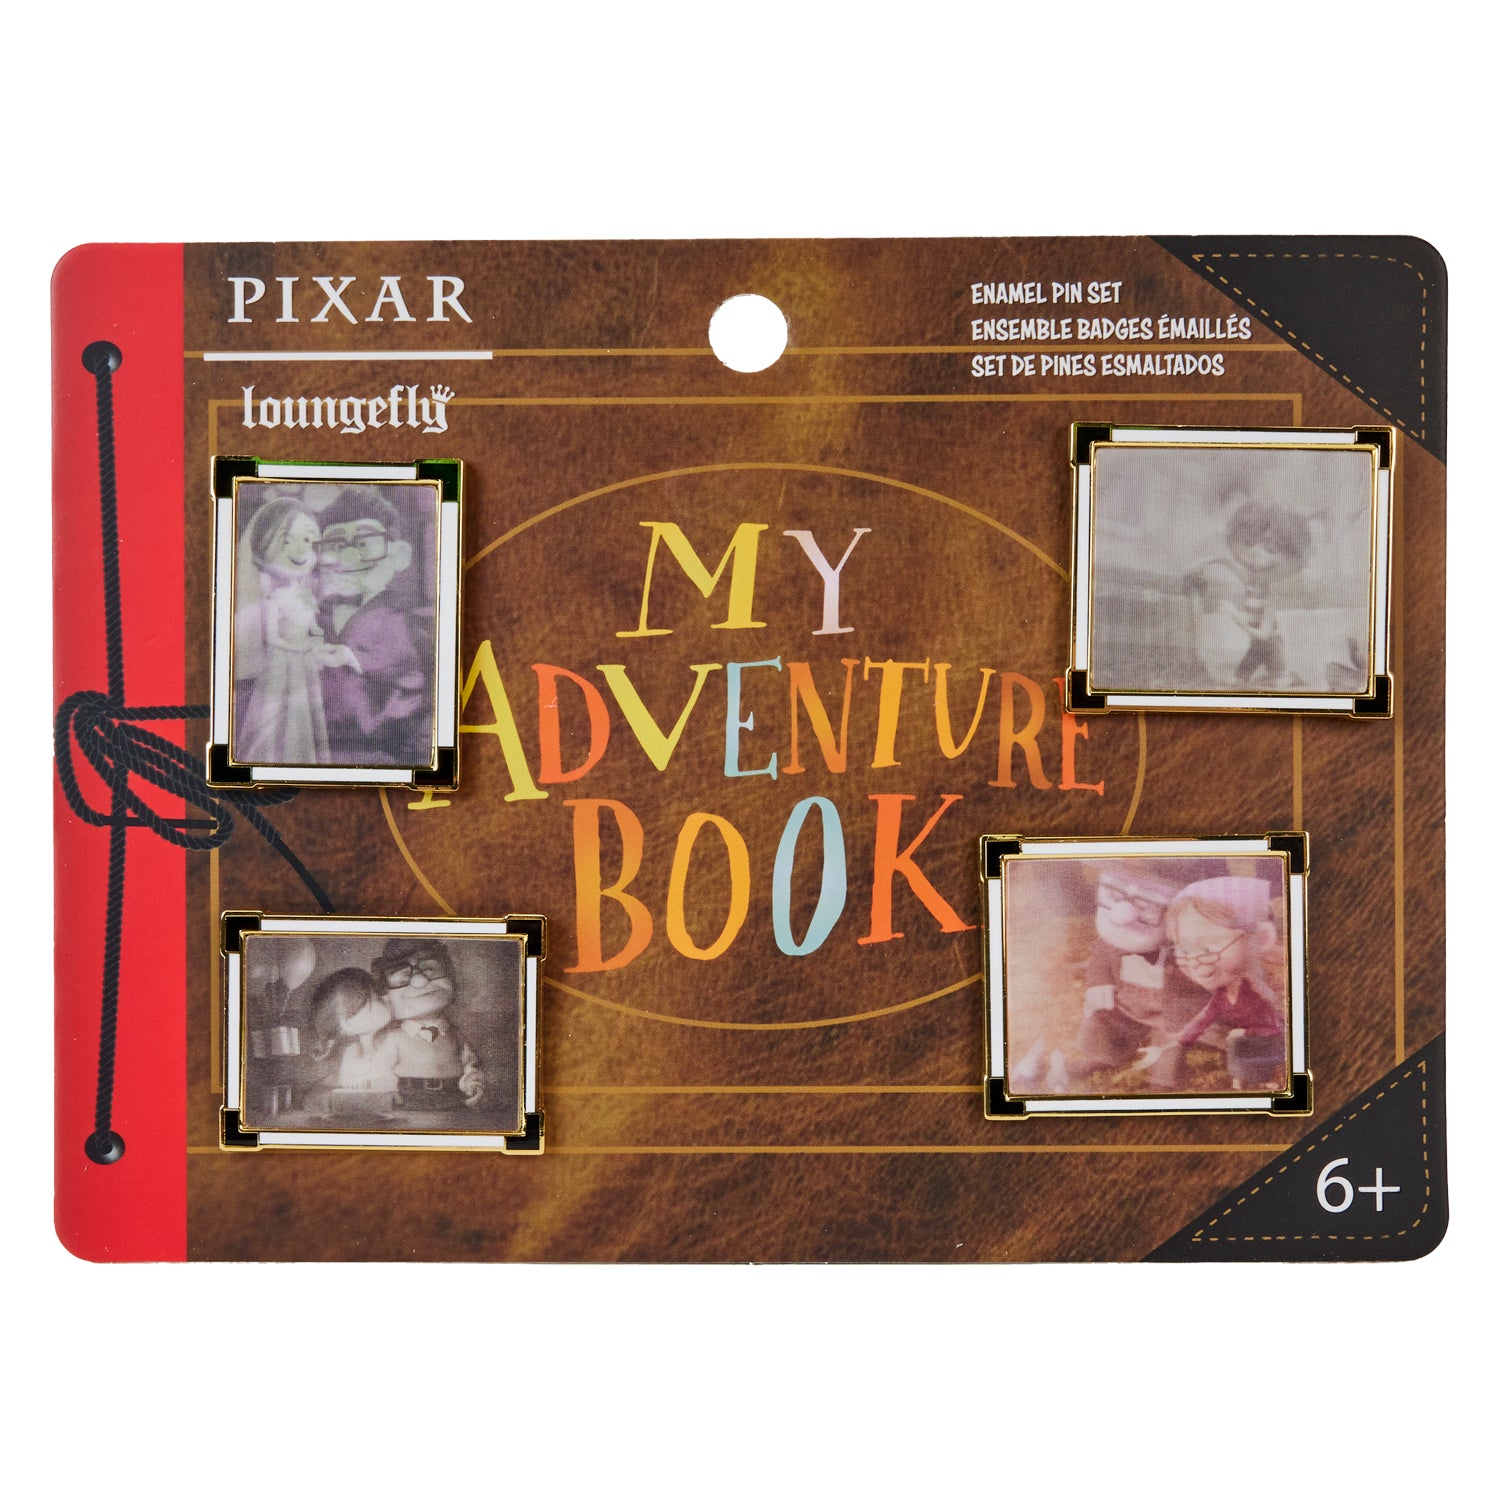 Loungefly x Disney Pixar 15th Anniversary Adventure Book 4 Piece Pin Set